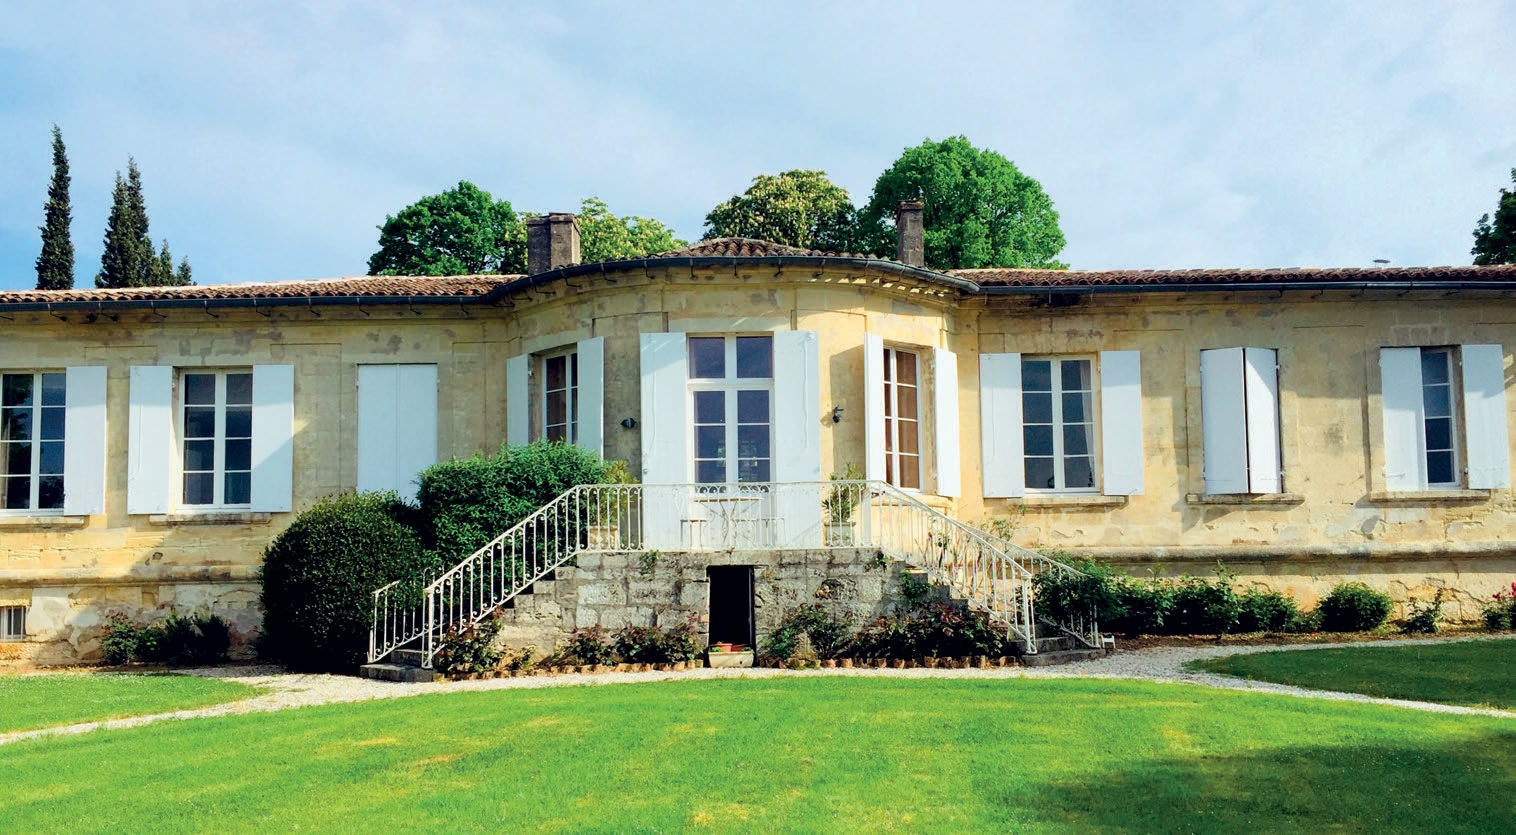 Château Dudon – et folkelig vineventyr fra Bordeaux